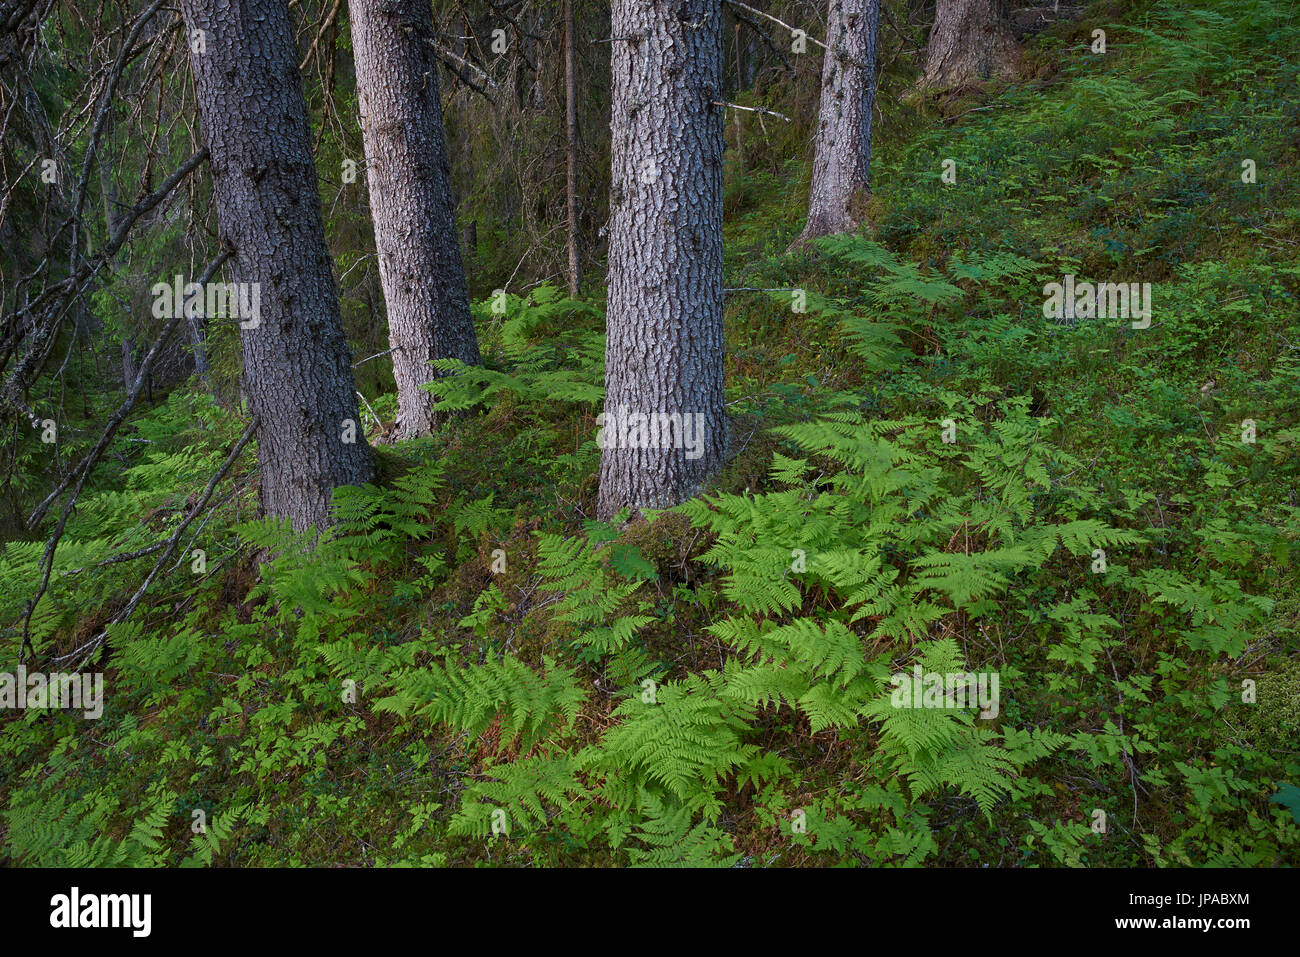 La Suède, Jämtland, forêt de sapins Banque D'Images